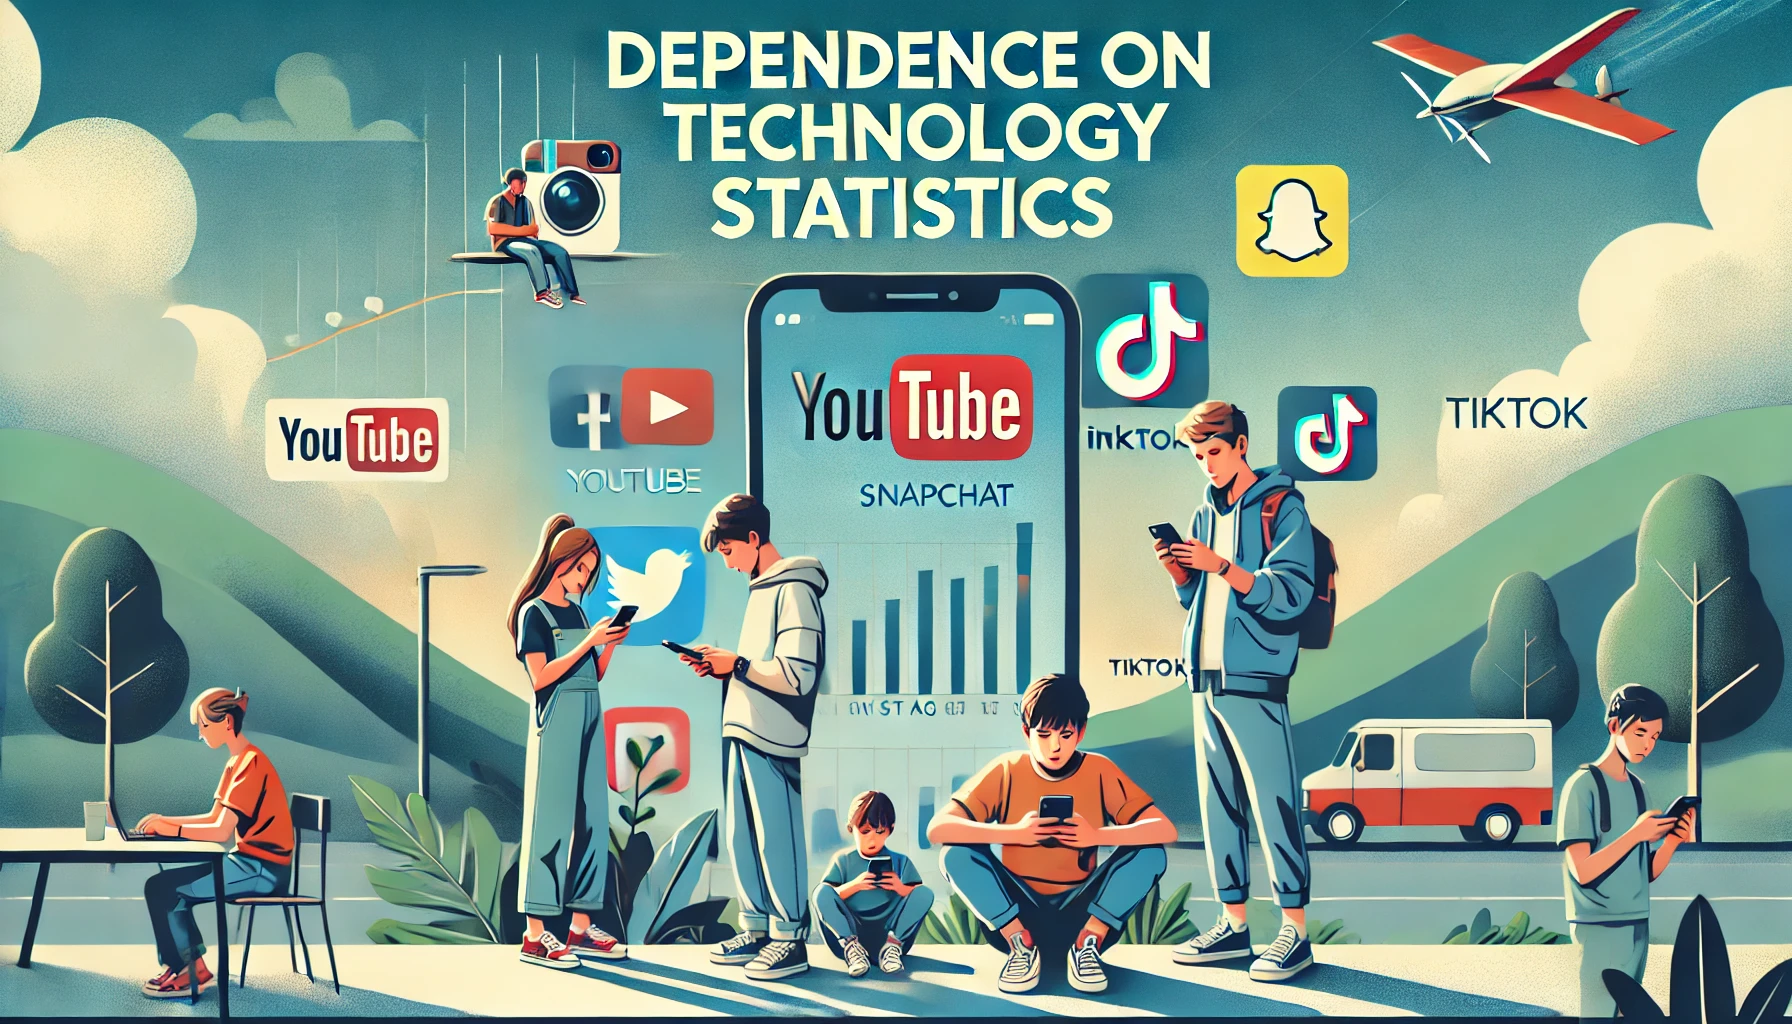 Dependence on Technology Statistics